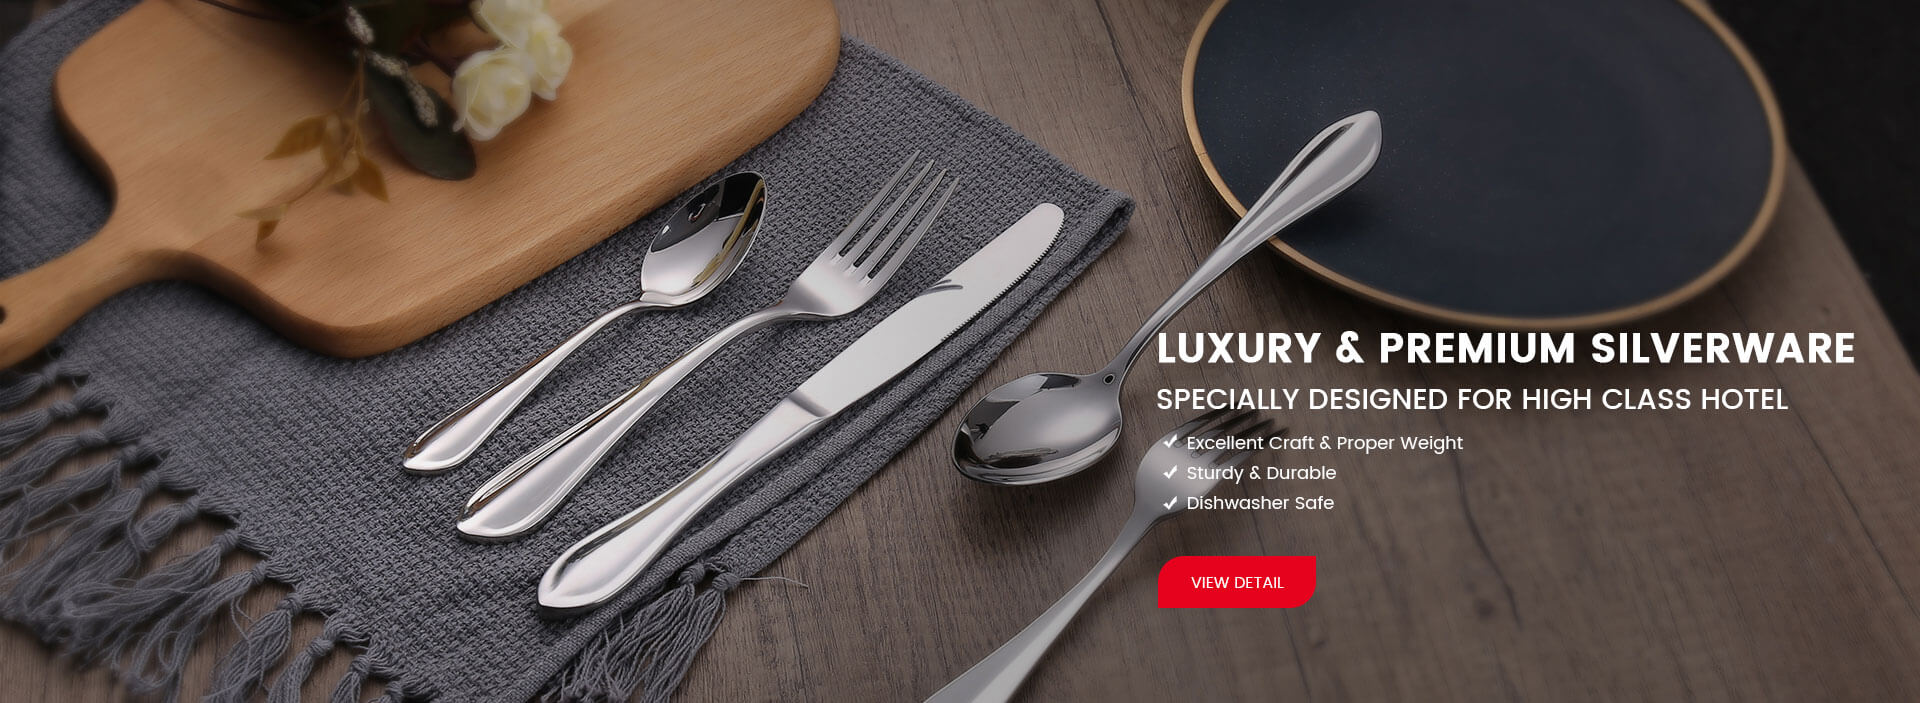 Luxury & Premium Silverware